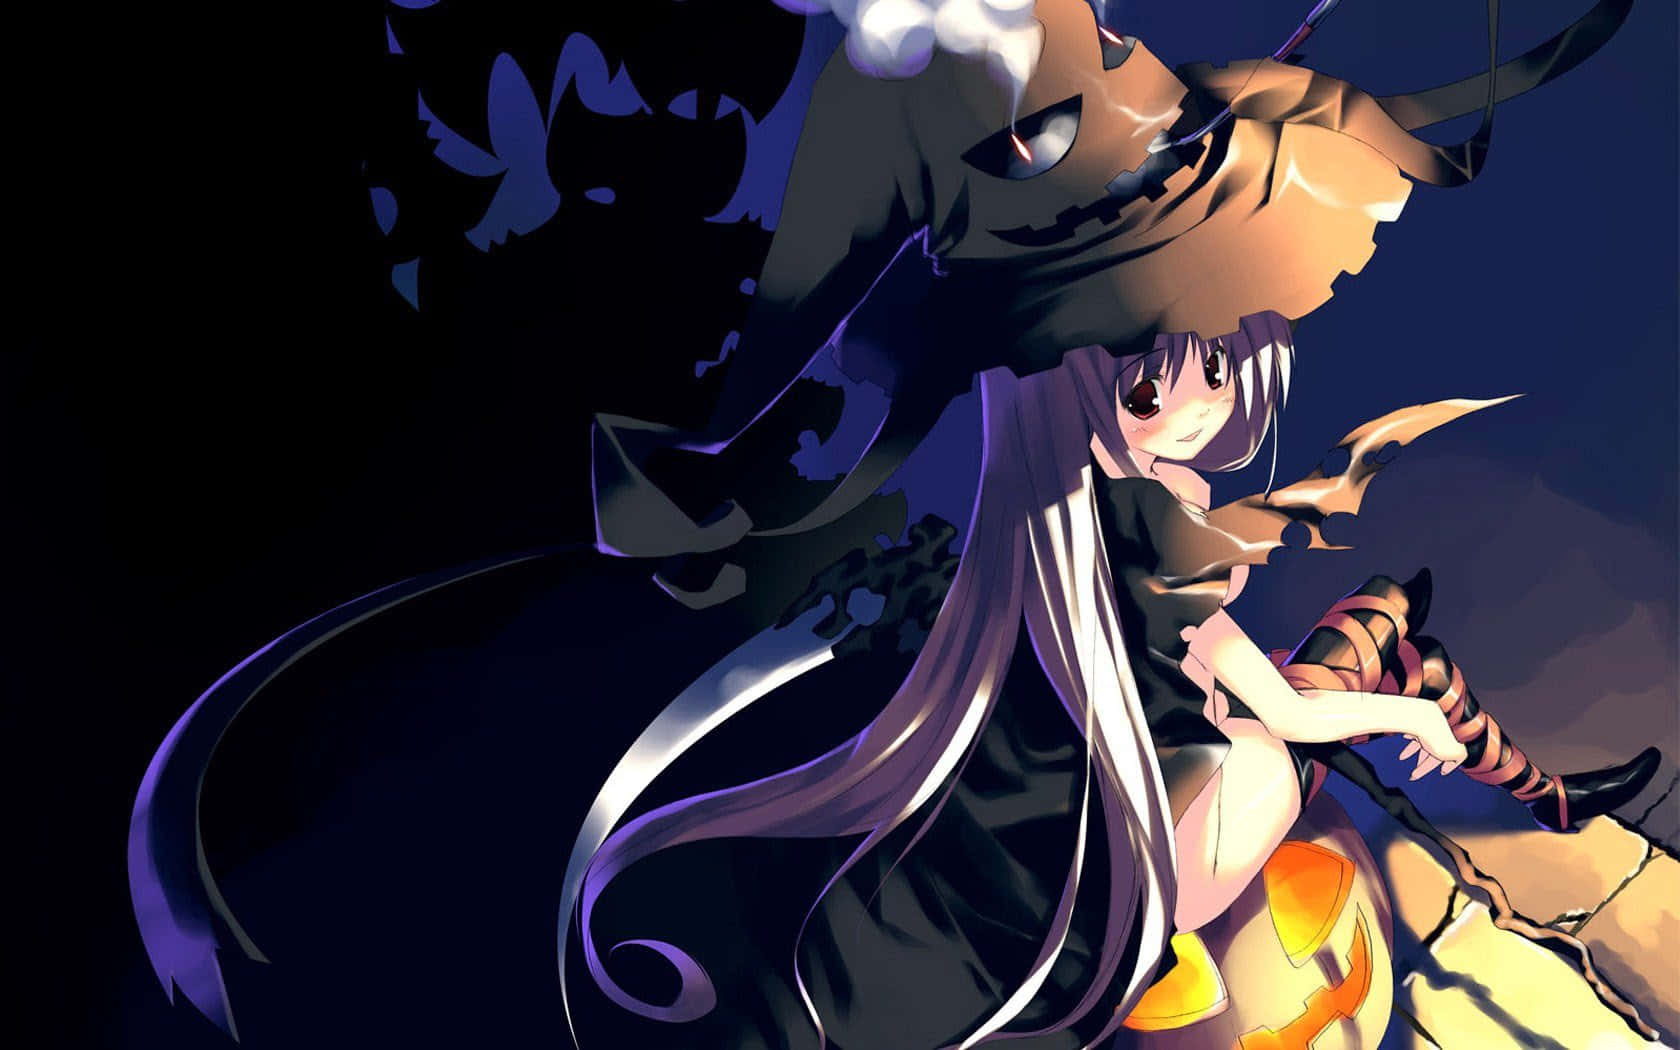 Ghostly Halloween Anime Girl with Her Pumpkin Companion Wallpaper